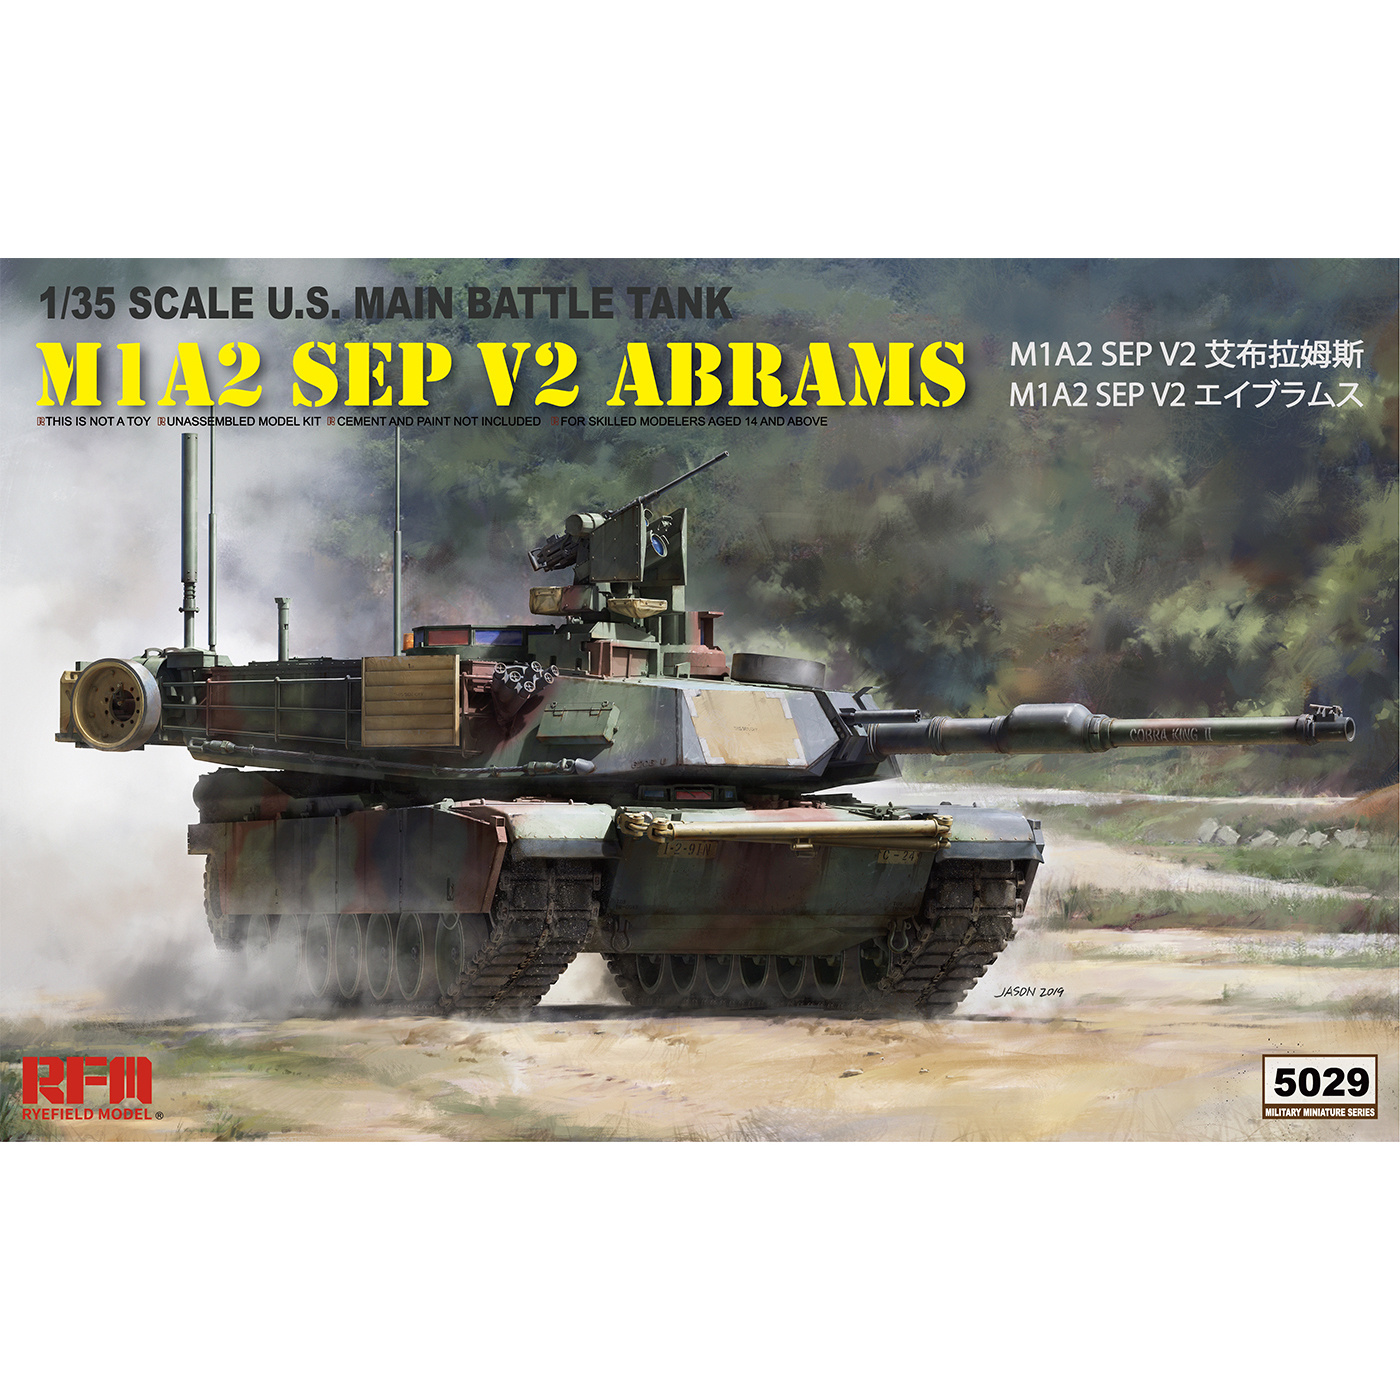 RM-5029 Rye Field Model 1/35 Танк США M1A2 SEP V2 ABRAMS